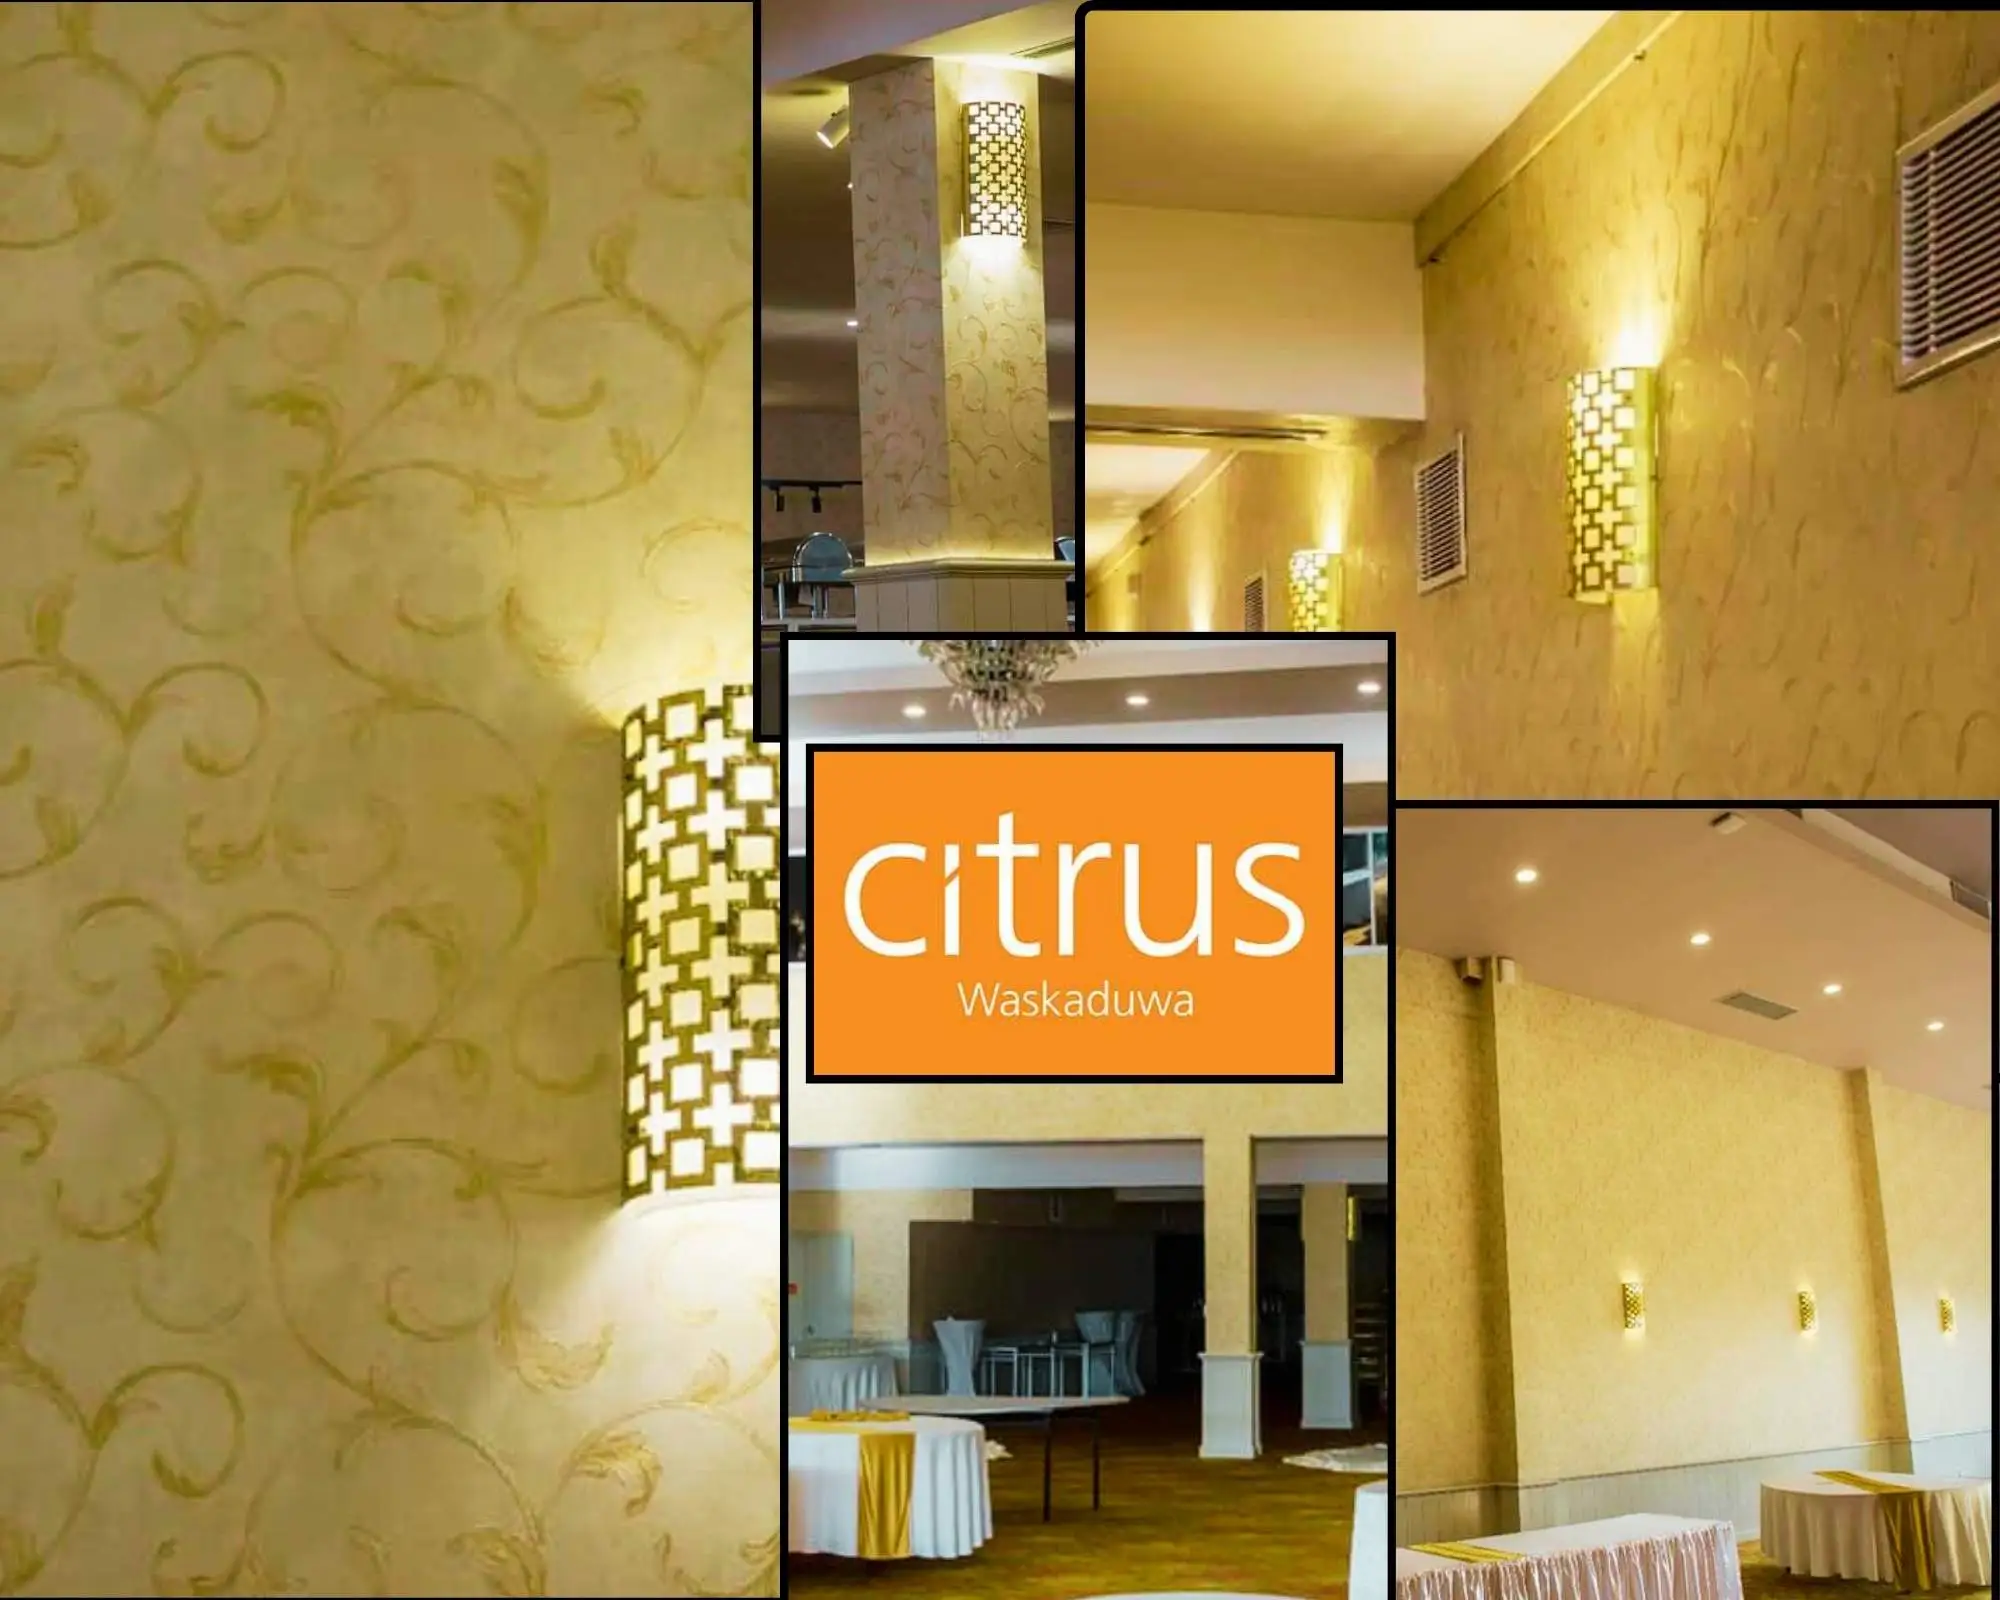 Citrus waskaduwa ballroom interior wallpaper 